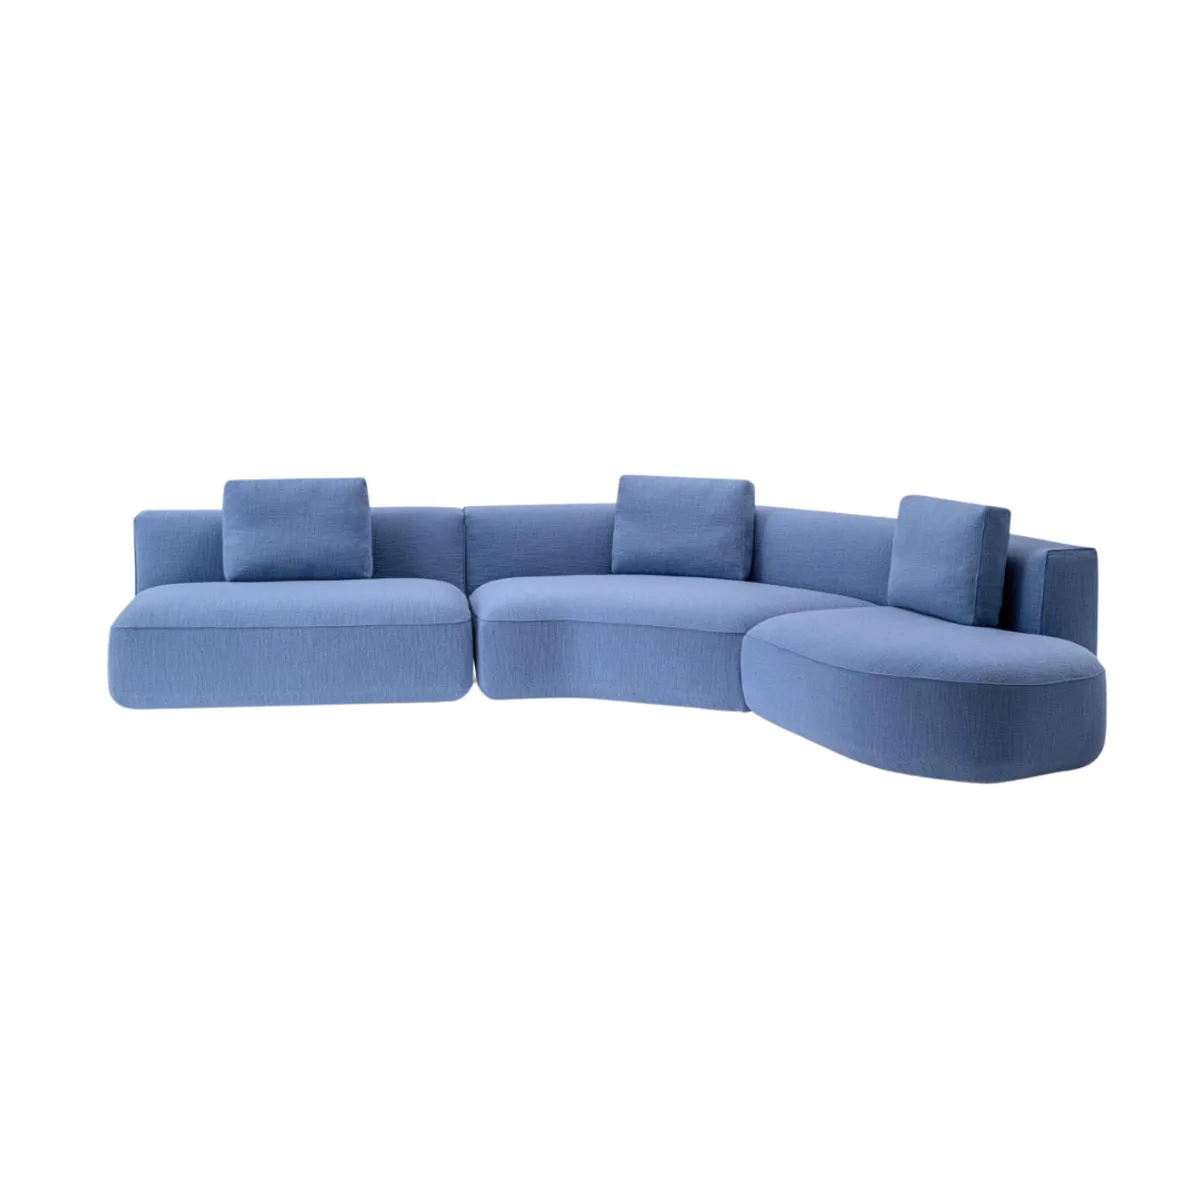 Jeff modular corner sofa 3